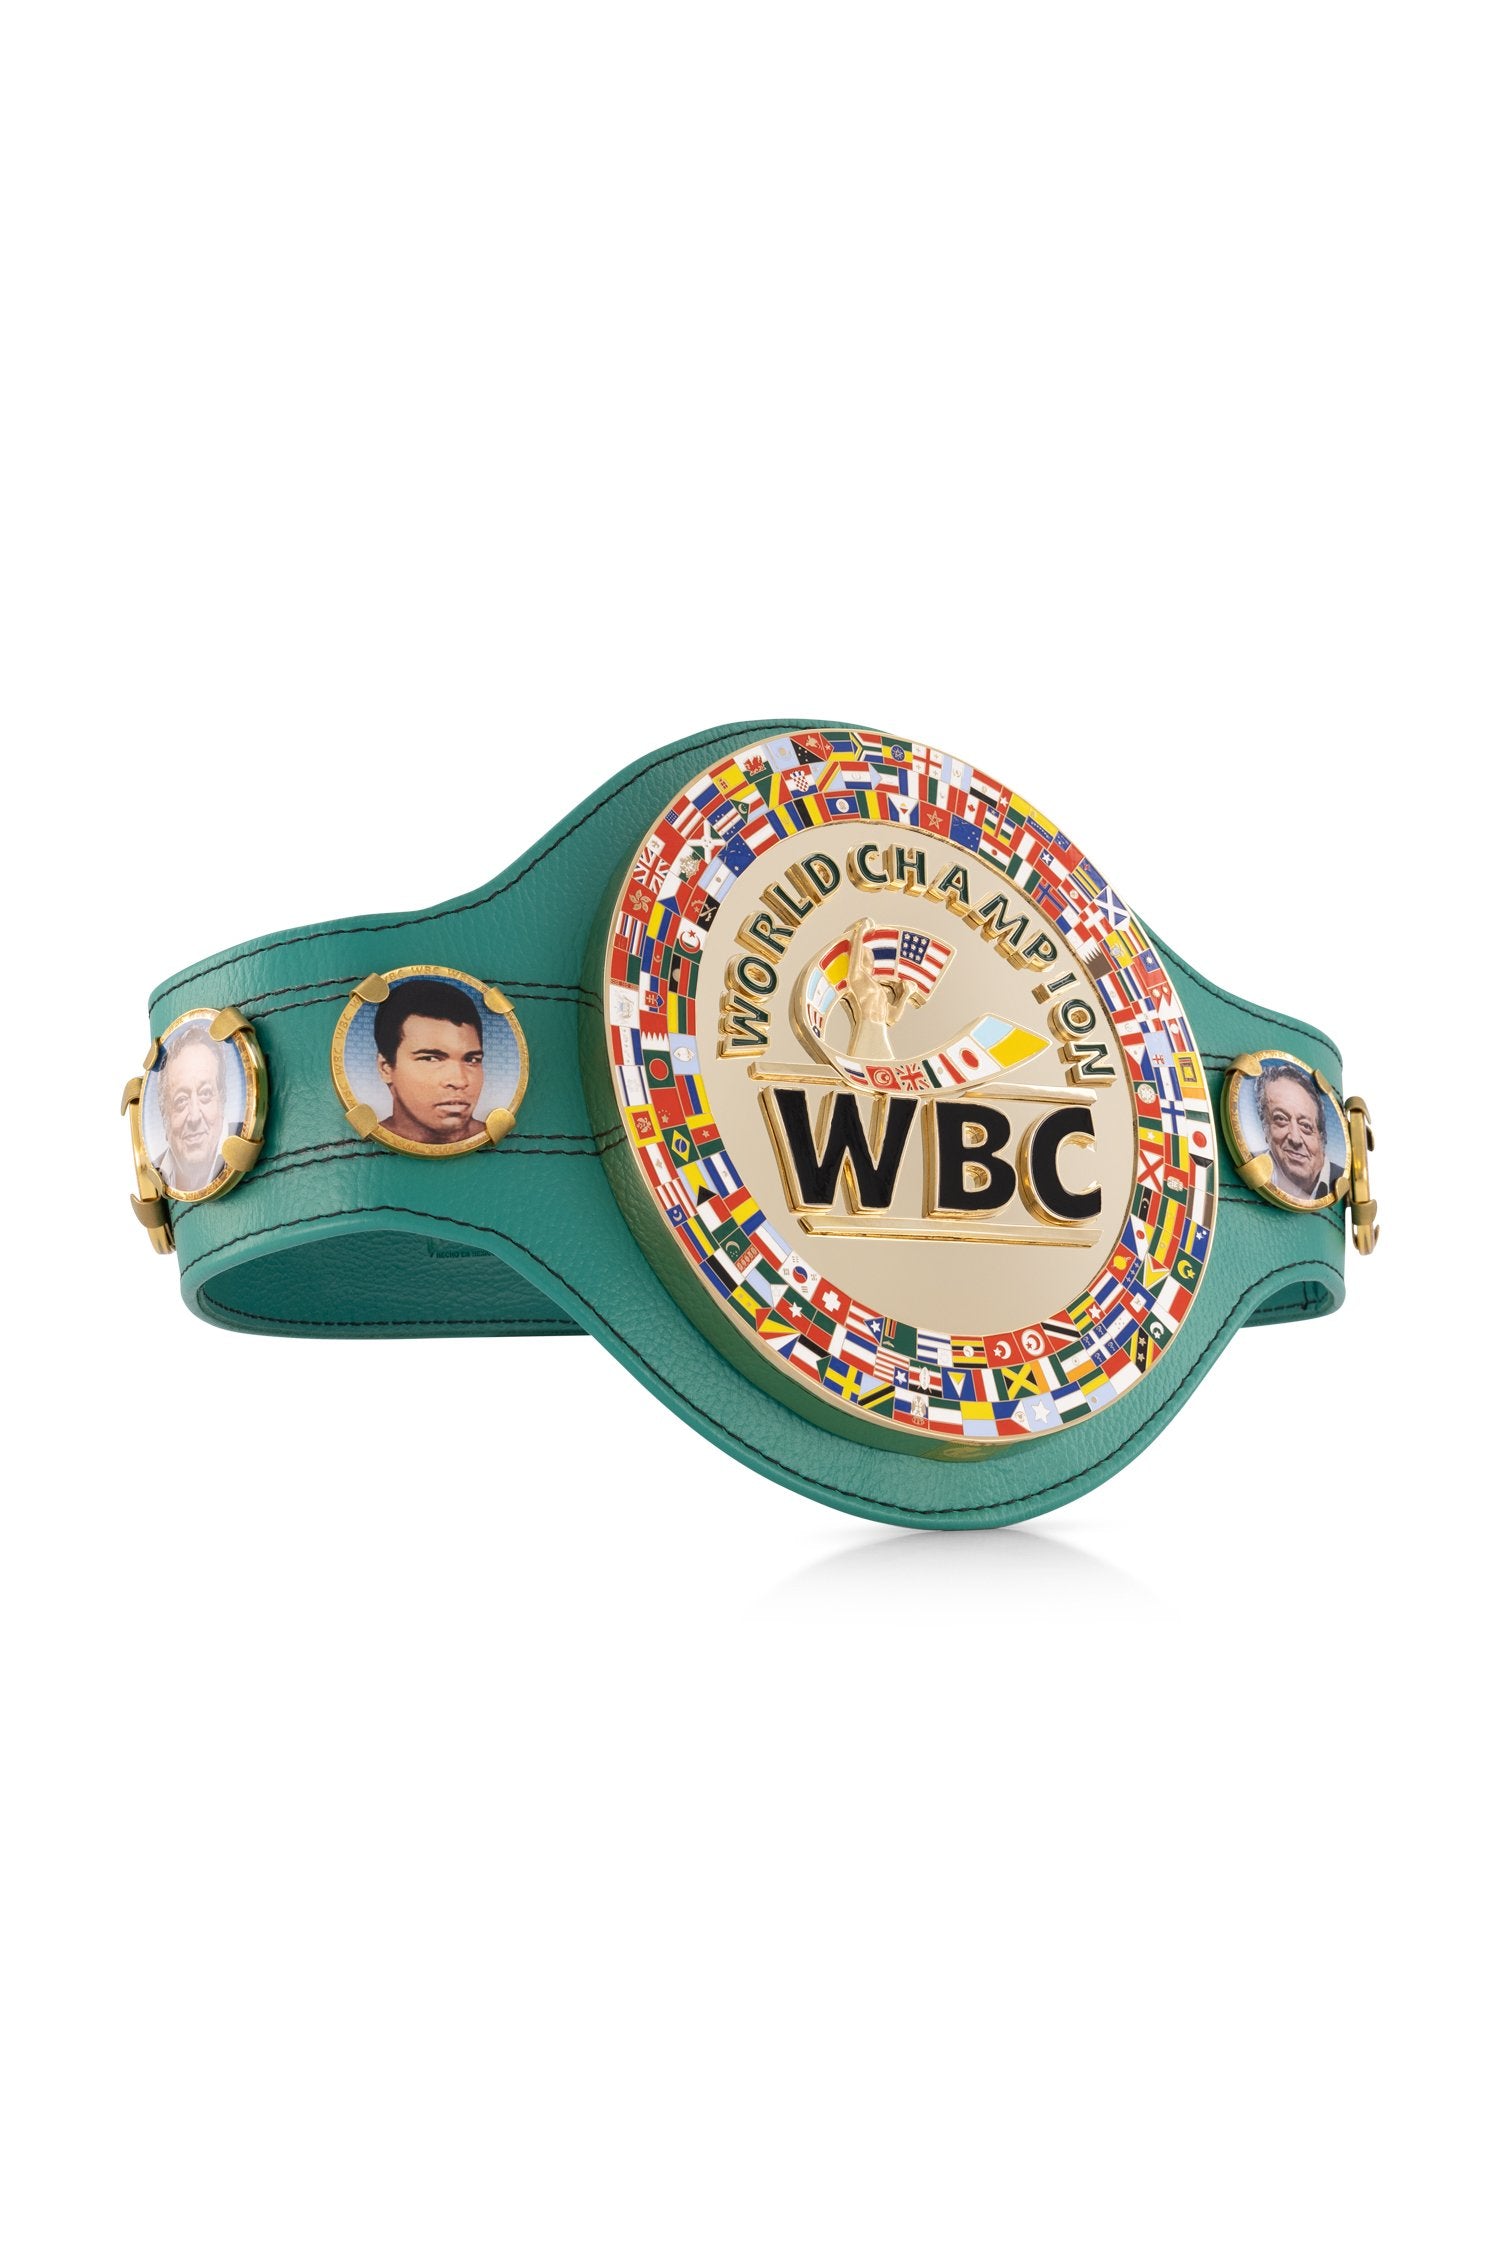 WBCアワード世界チャンピオンベルト - www.buyfromhill.com